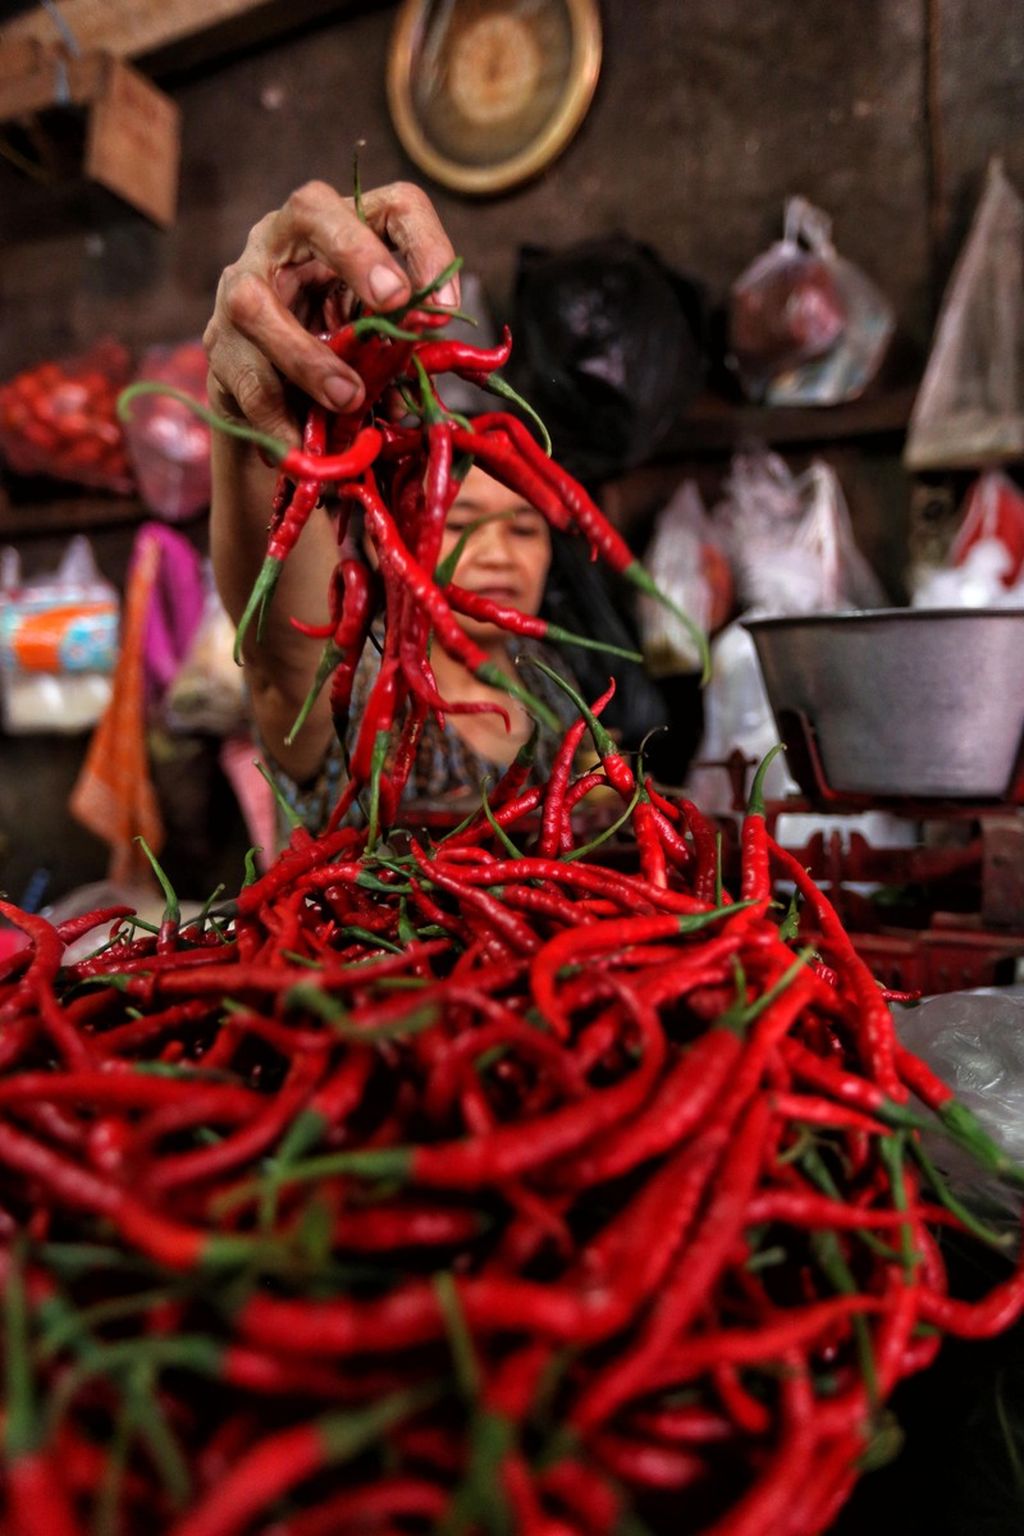  Pedagang melayani pembeli cabai merah keriting di Pasar Kebayoran Lama, Jakarta Selatan, Rabu (30/9/2020). Harga cabai merah keriting di pasar beranjak naik dari tiga hari yang lalu dari Rp 25.000 per kilogram menjadi Rp 38.000 per kg.